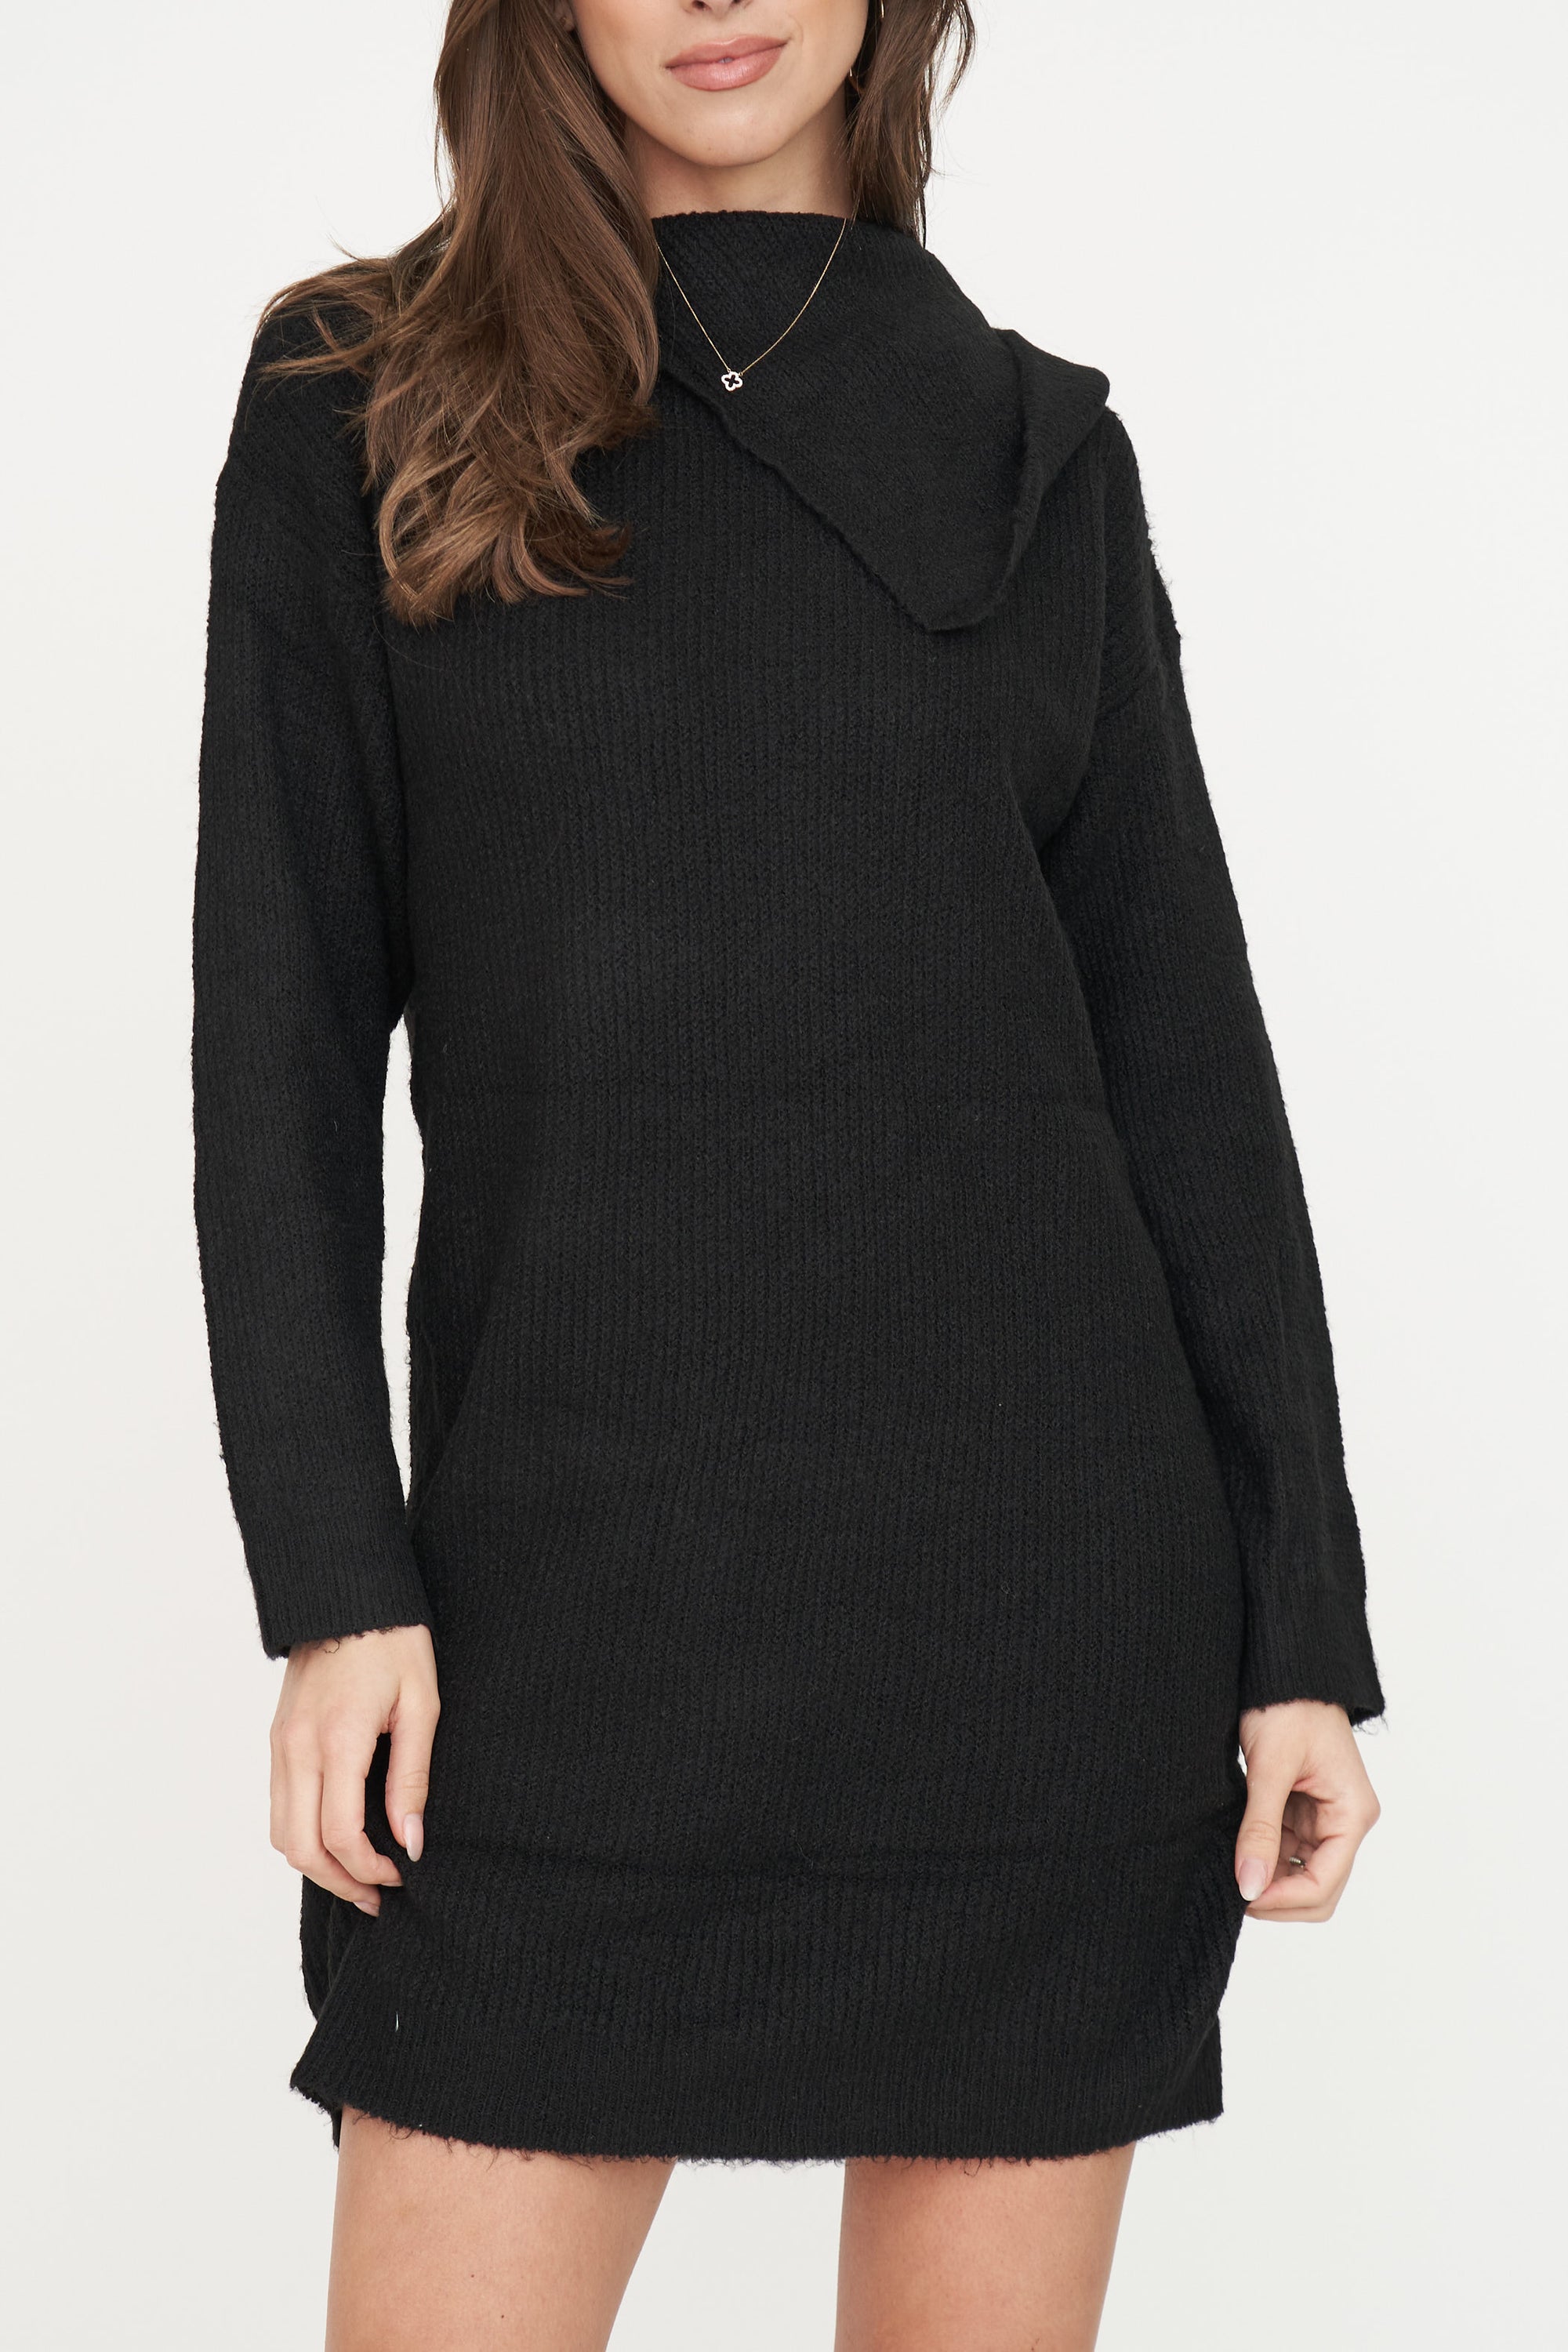 Arosa Asymmetric Turtleneck Sweater Dress